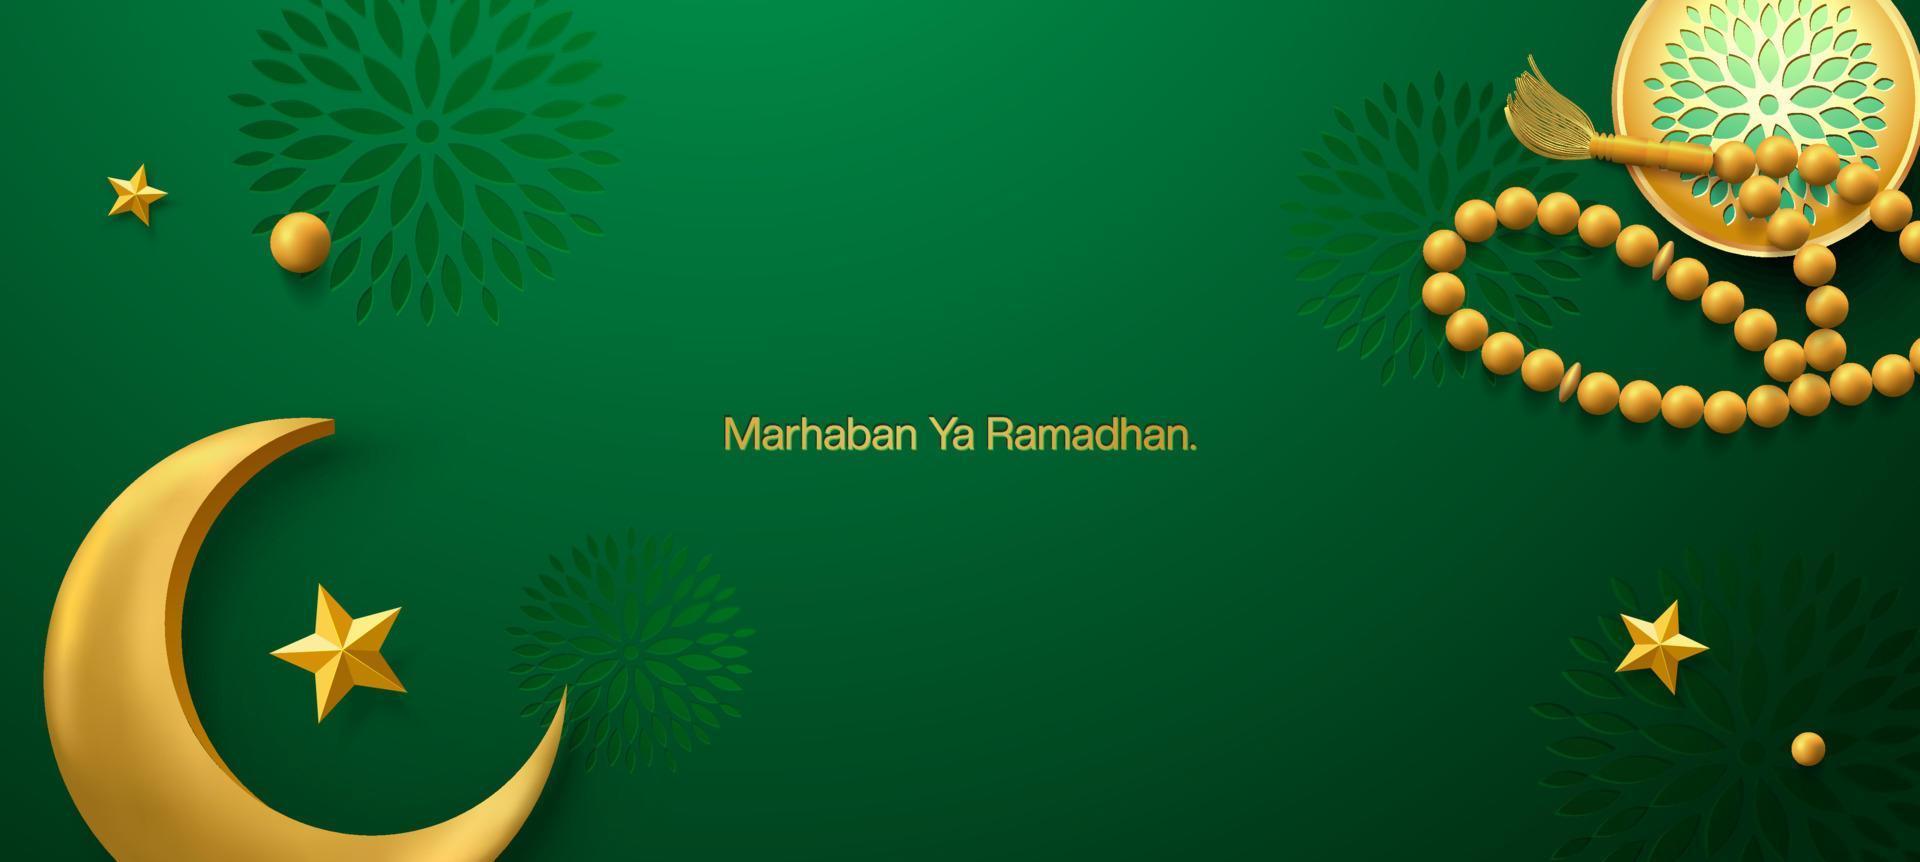 3d modern Islamic holiday banner, suitable for Ramadan, Eid Fitri, Eid Adha and Maulid. Moon and islamic decor on green background. vector